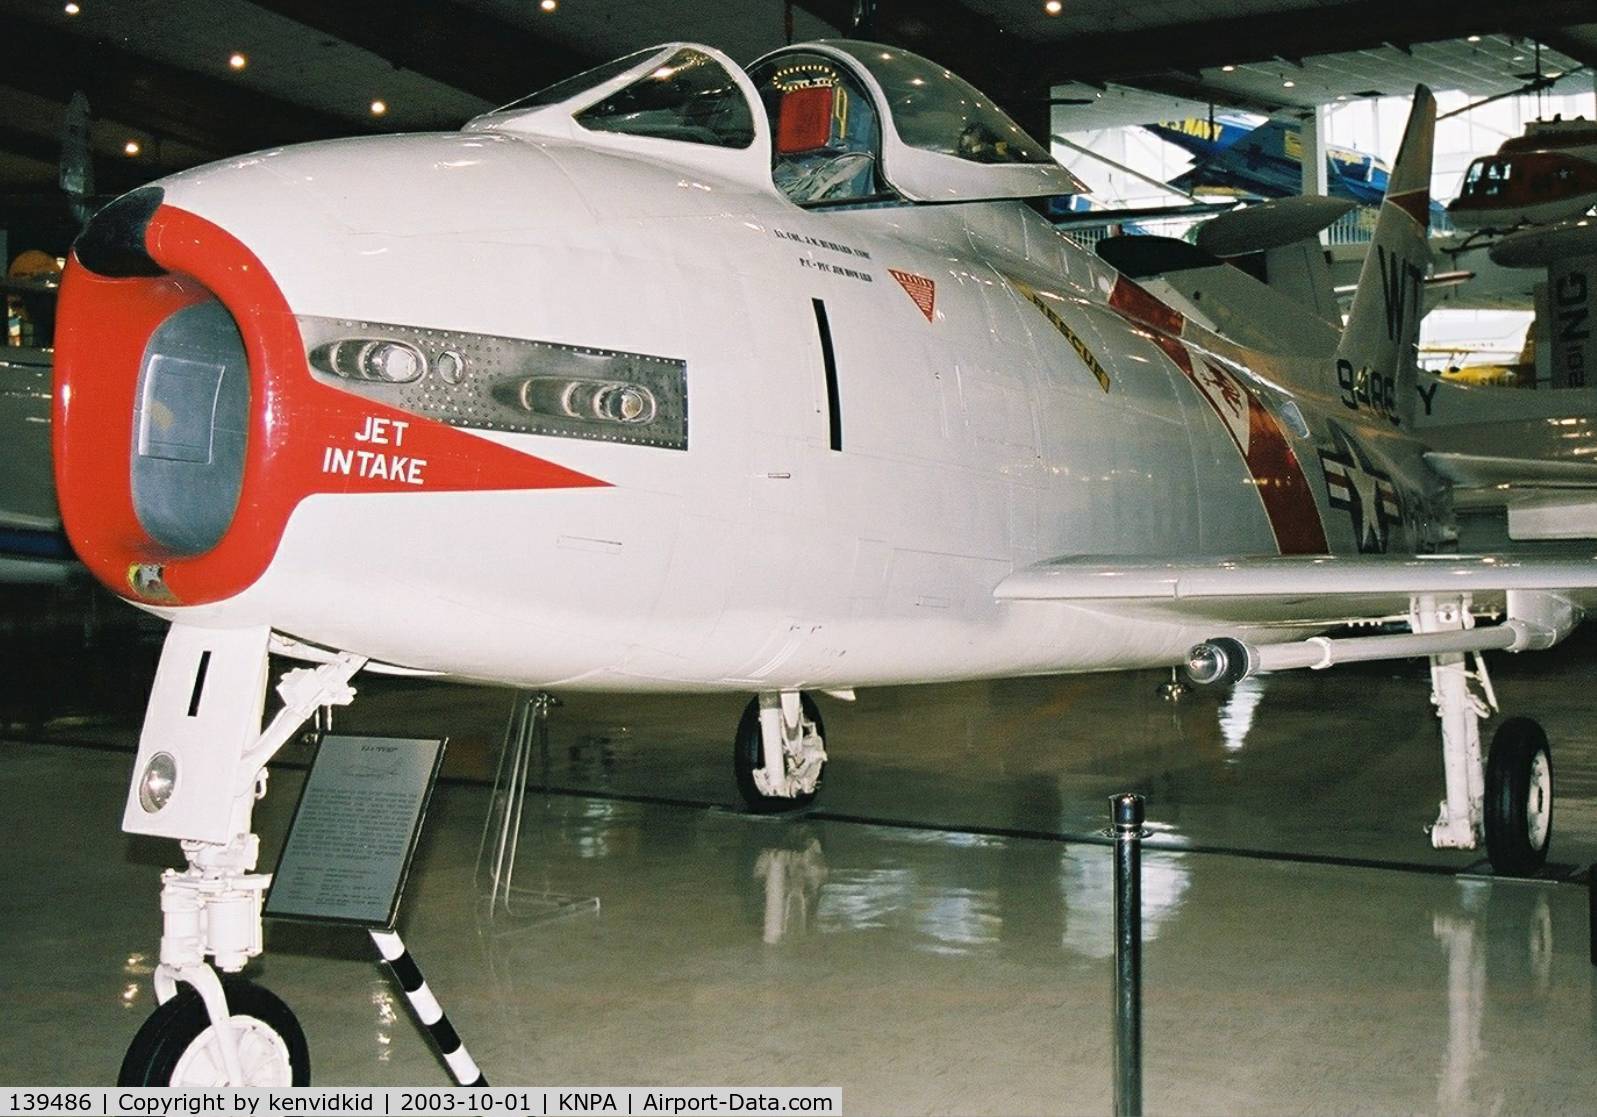 139486, 1957 North American FJ-4 Fury C/N 209-106, On display at the Museum of Naval Aviation, Pensacola.